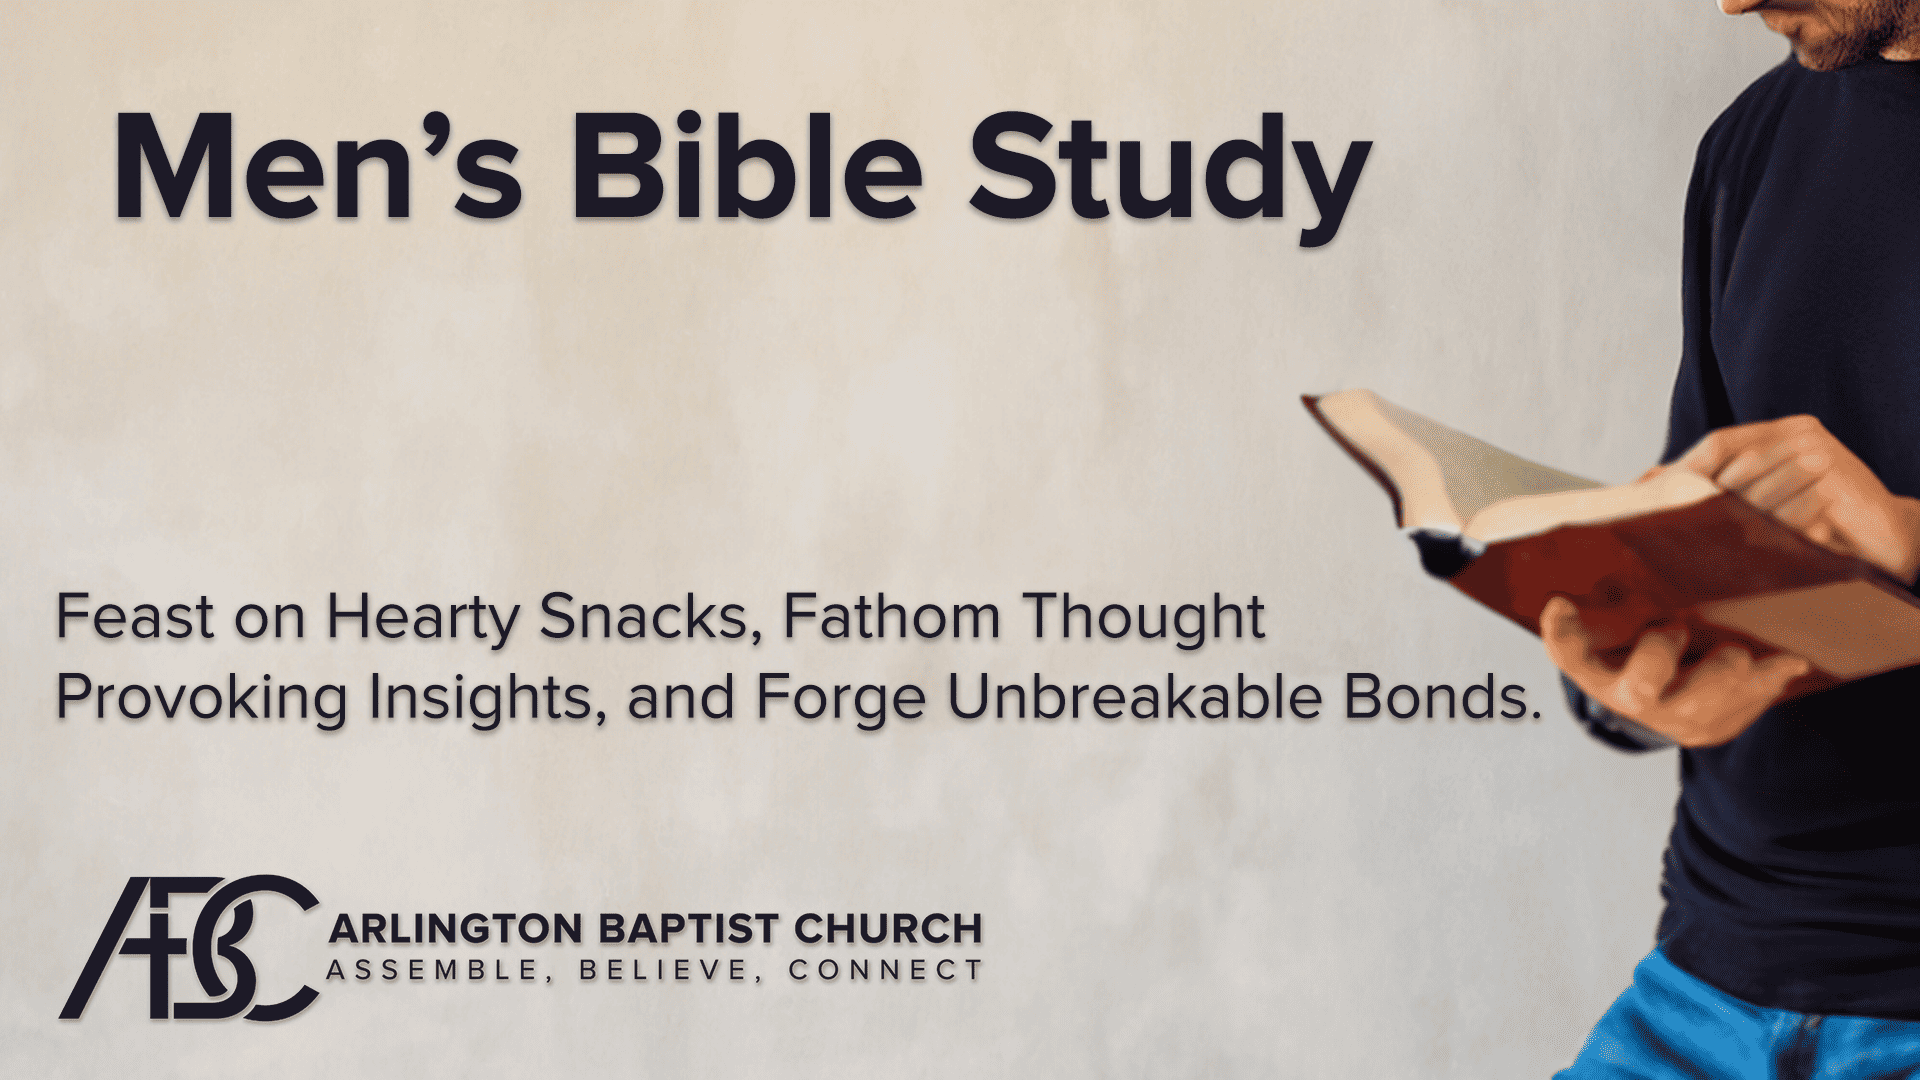 Men's Bible Study at Arlington Baptist Church